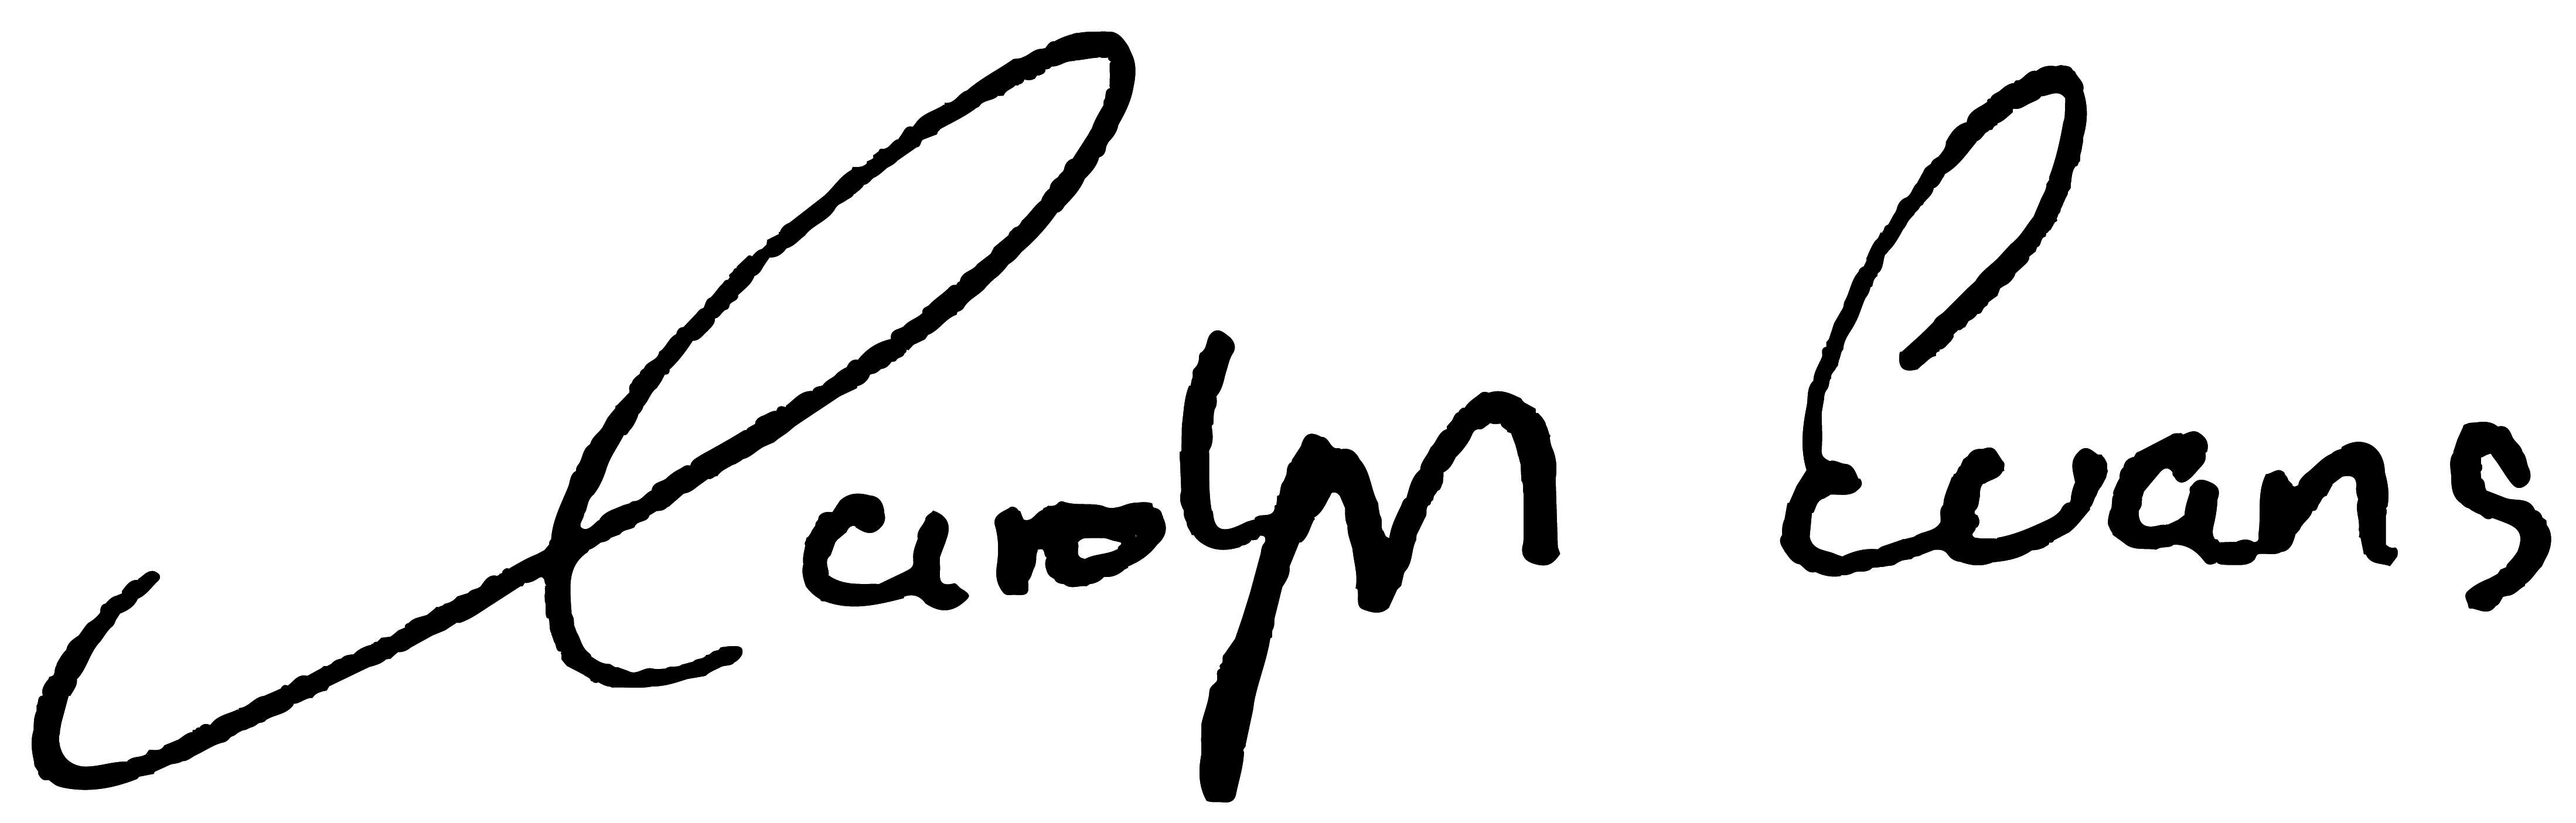 signature of Professor Carolyn Evans